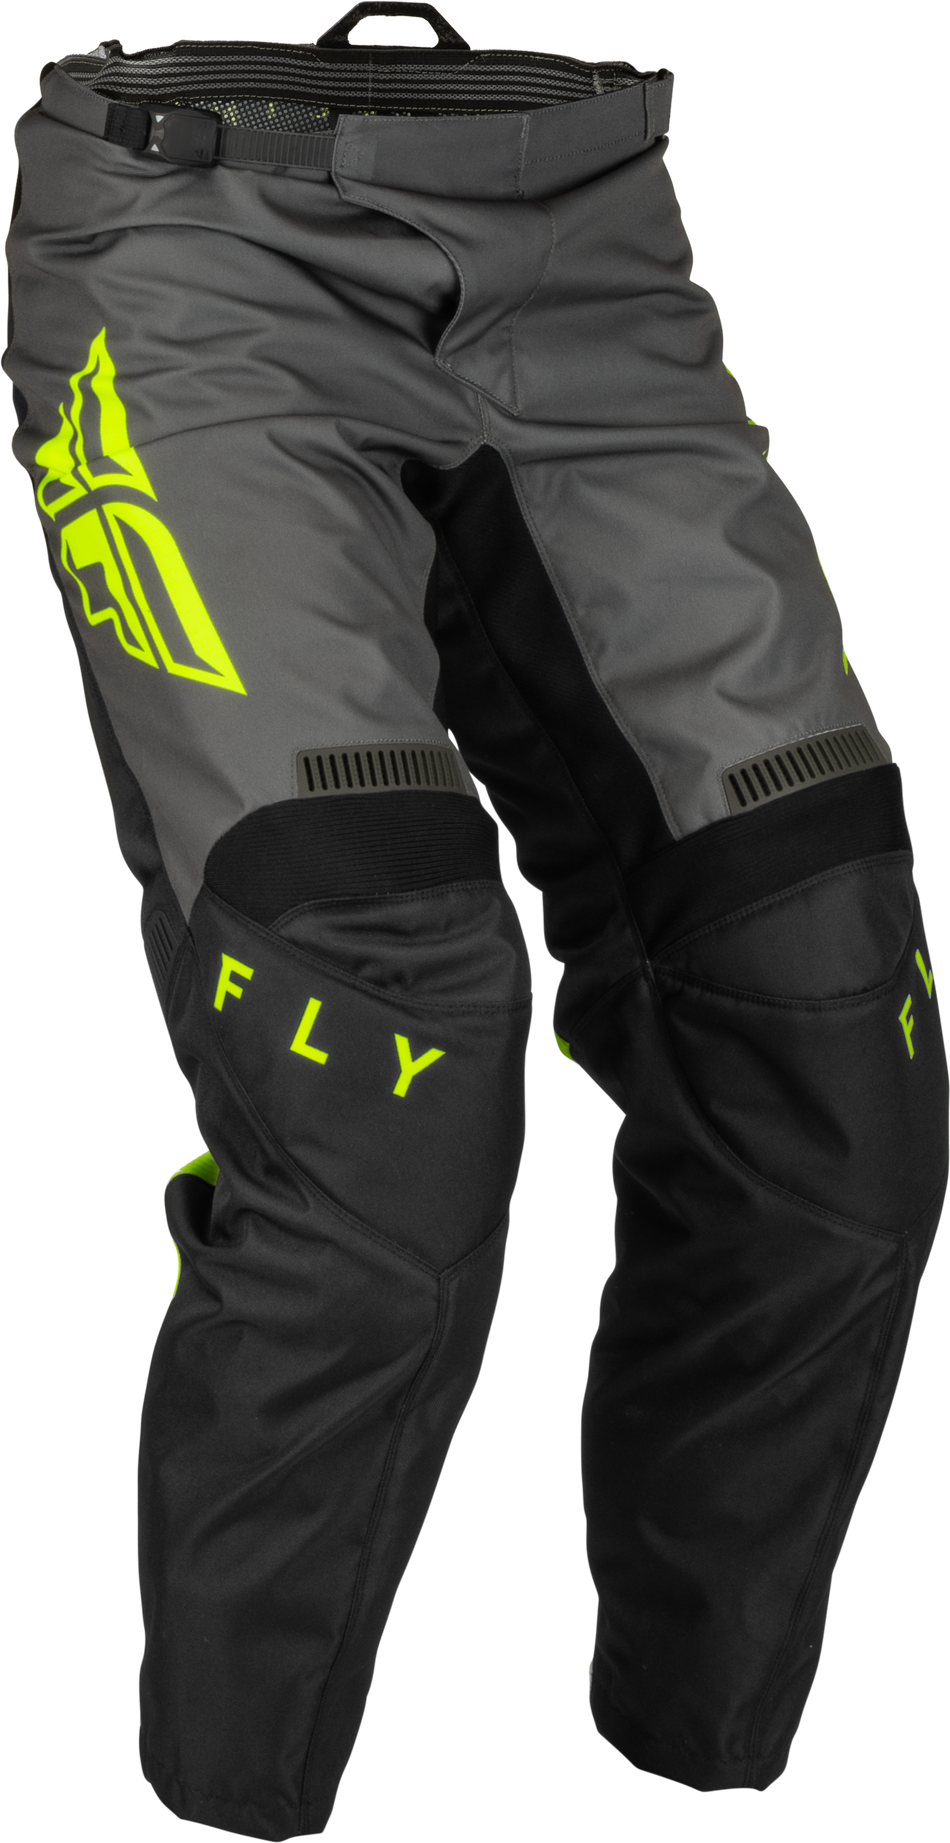 FLY RACING F-16 Pants Black/Grey/Hi-Vis Sz 36 376-93036